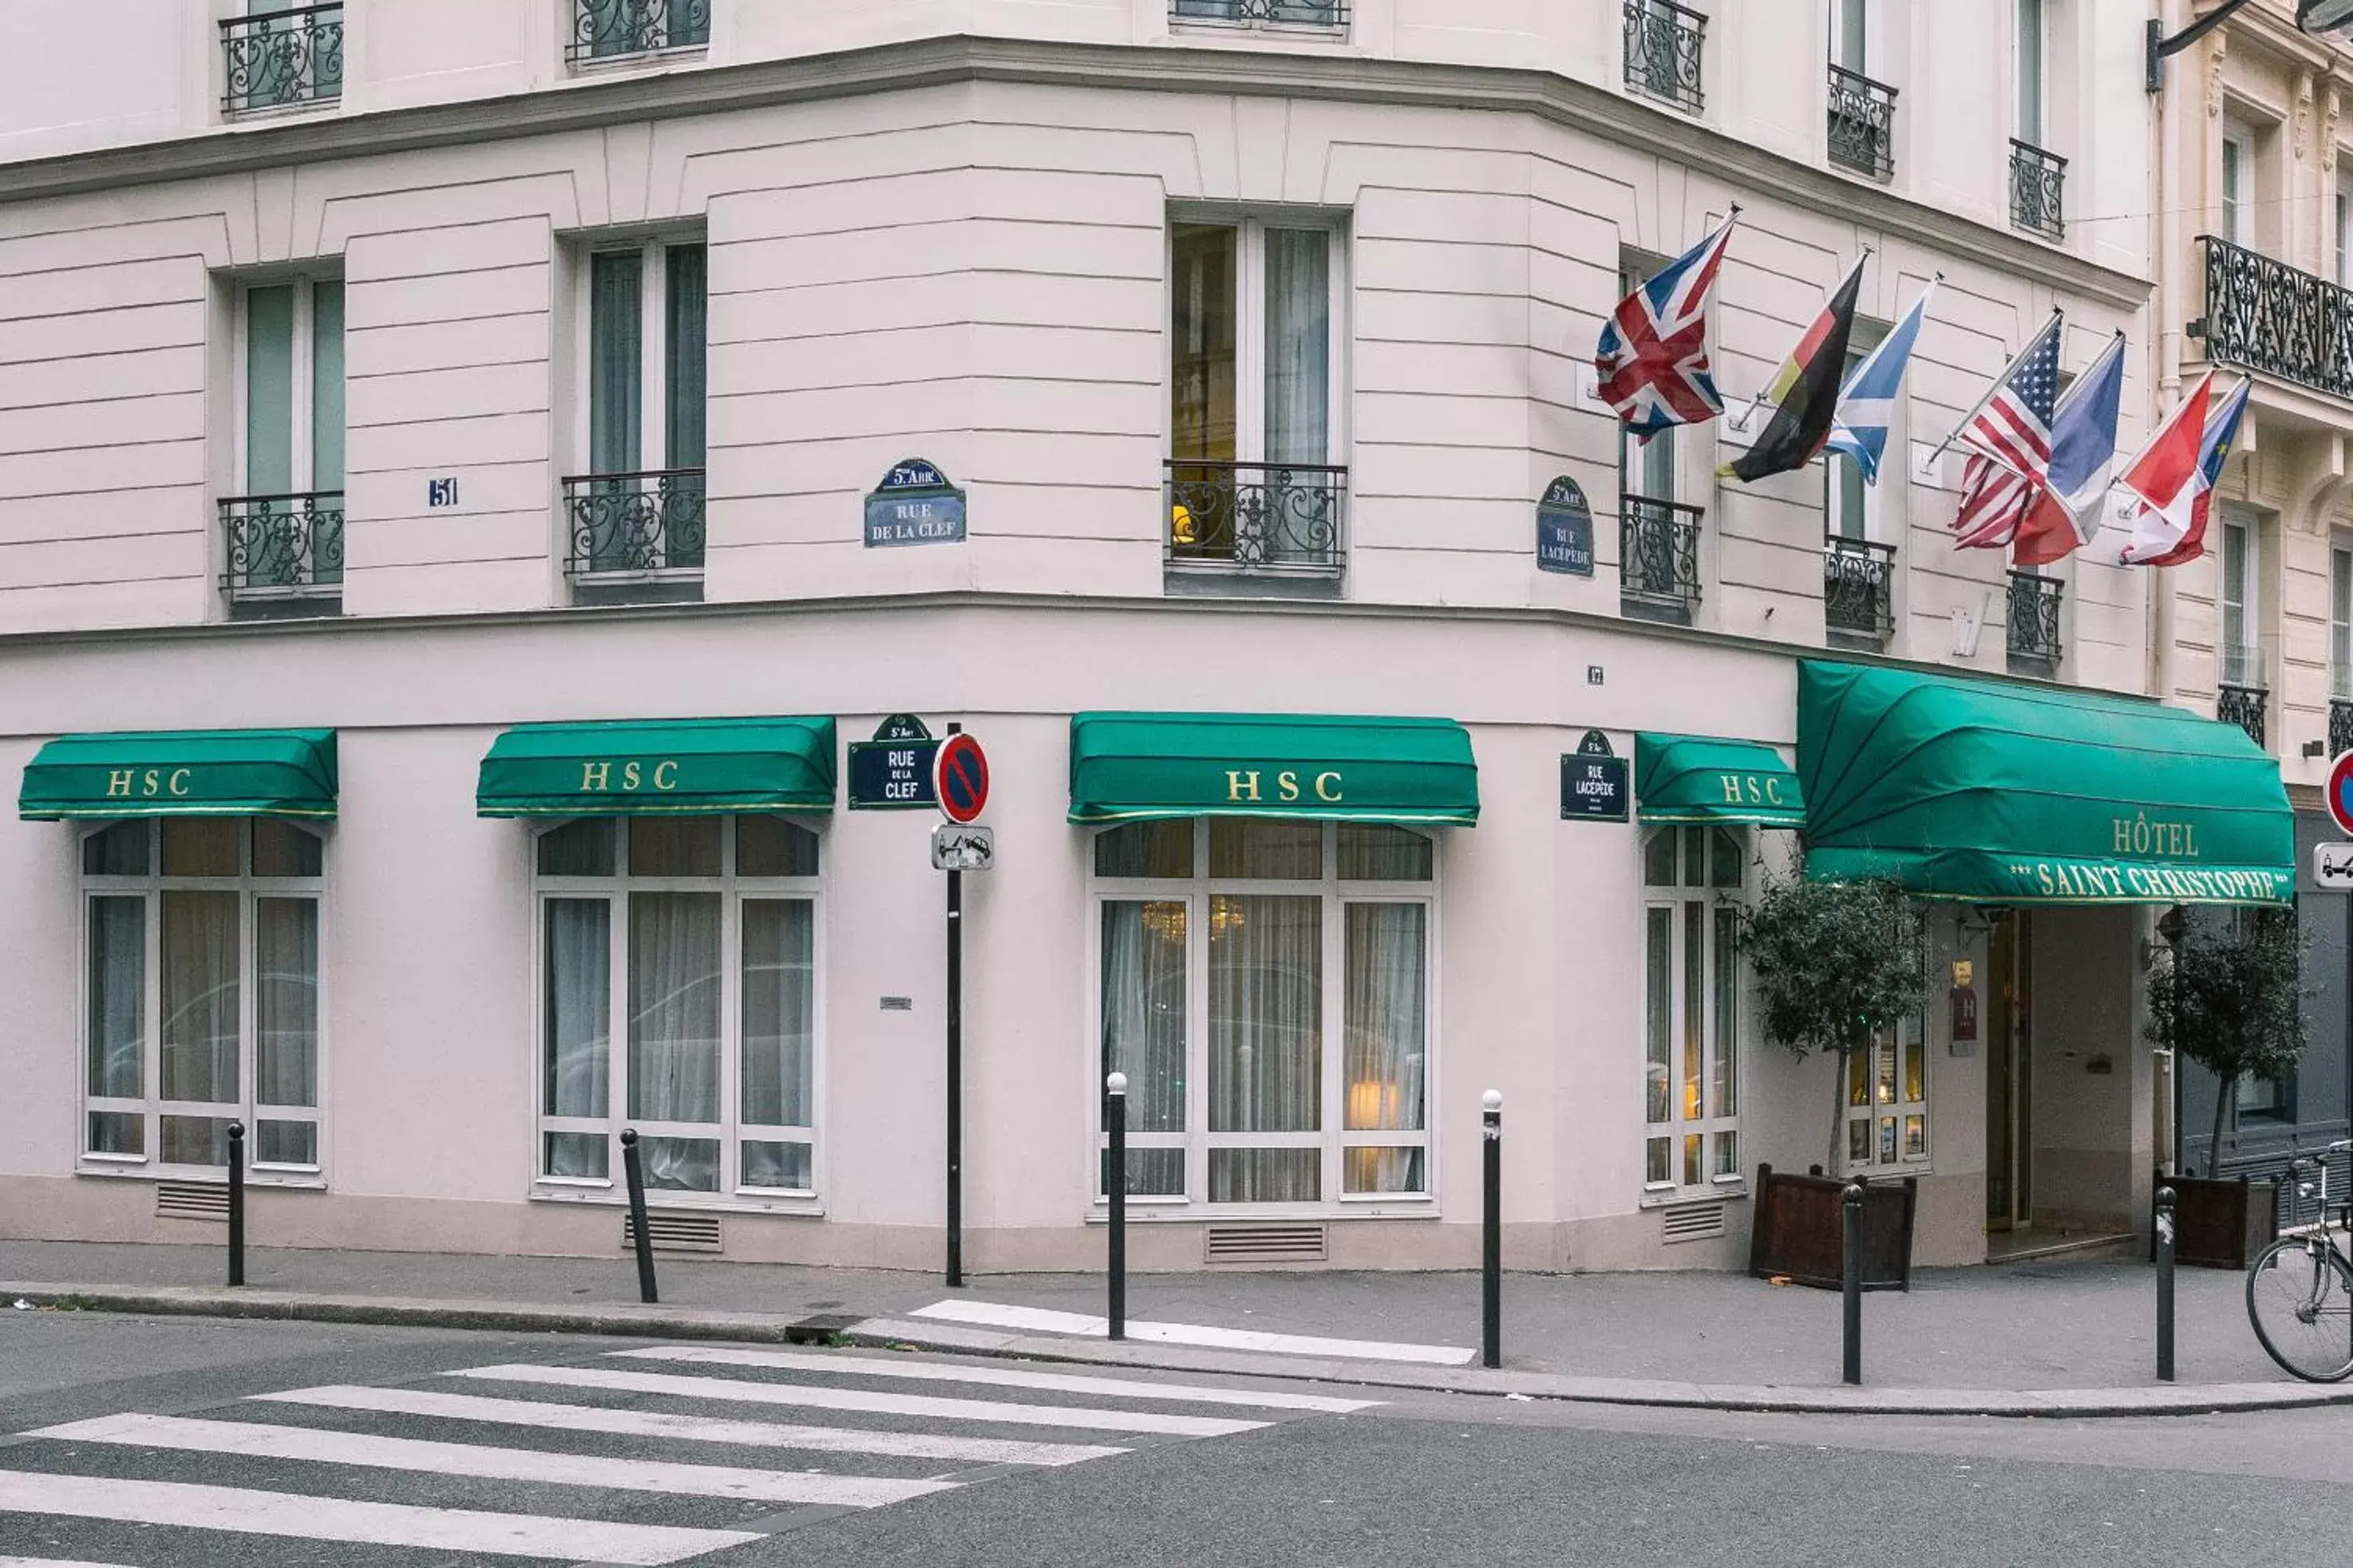 Facade/entrance, Property Building in Hotel Saint Christophe